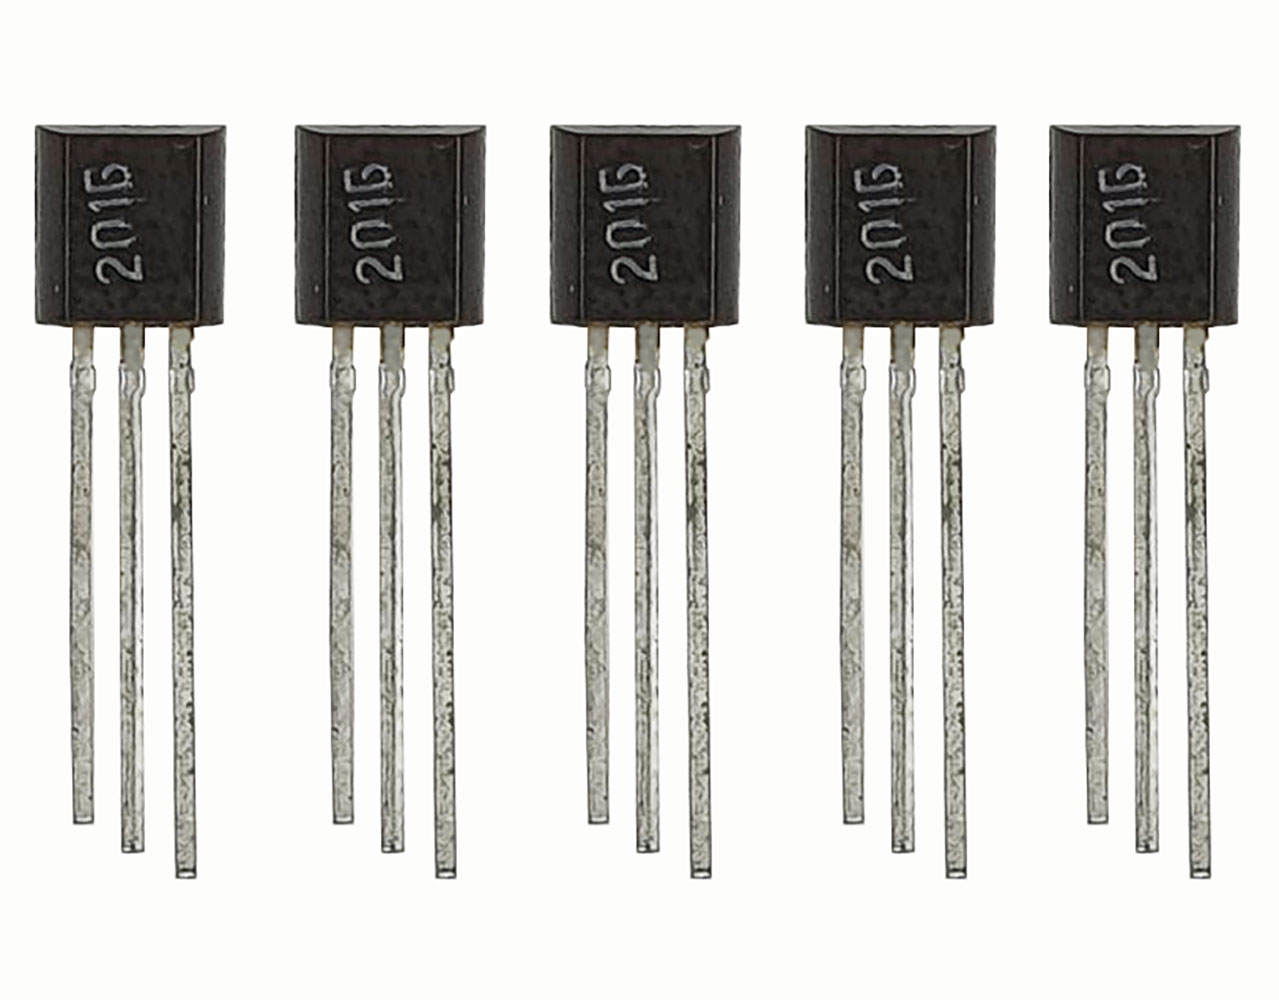 Транзистор КТ201БМ, 5 штук / Аналоги: КТ201Б, MPS9601 / n-p-n усилительные